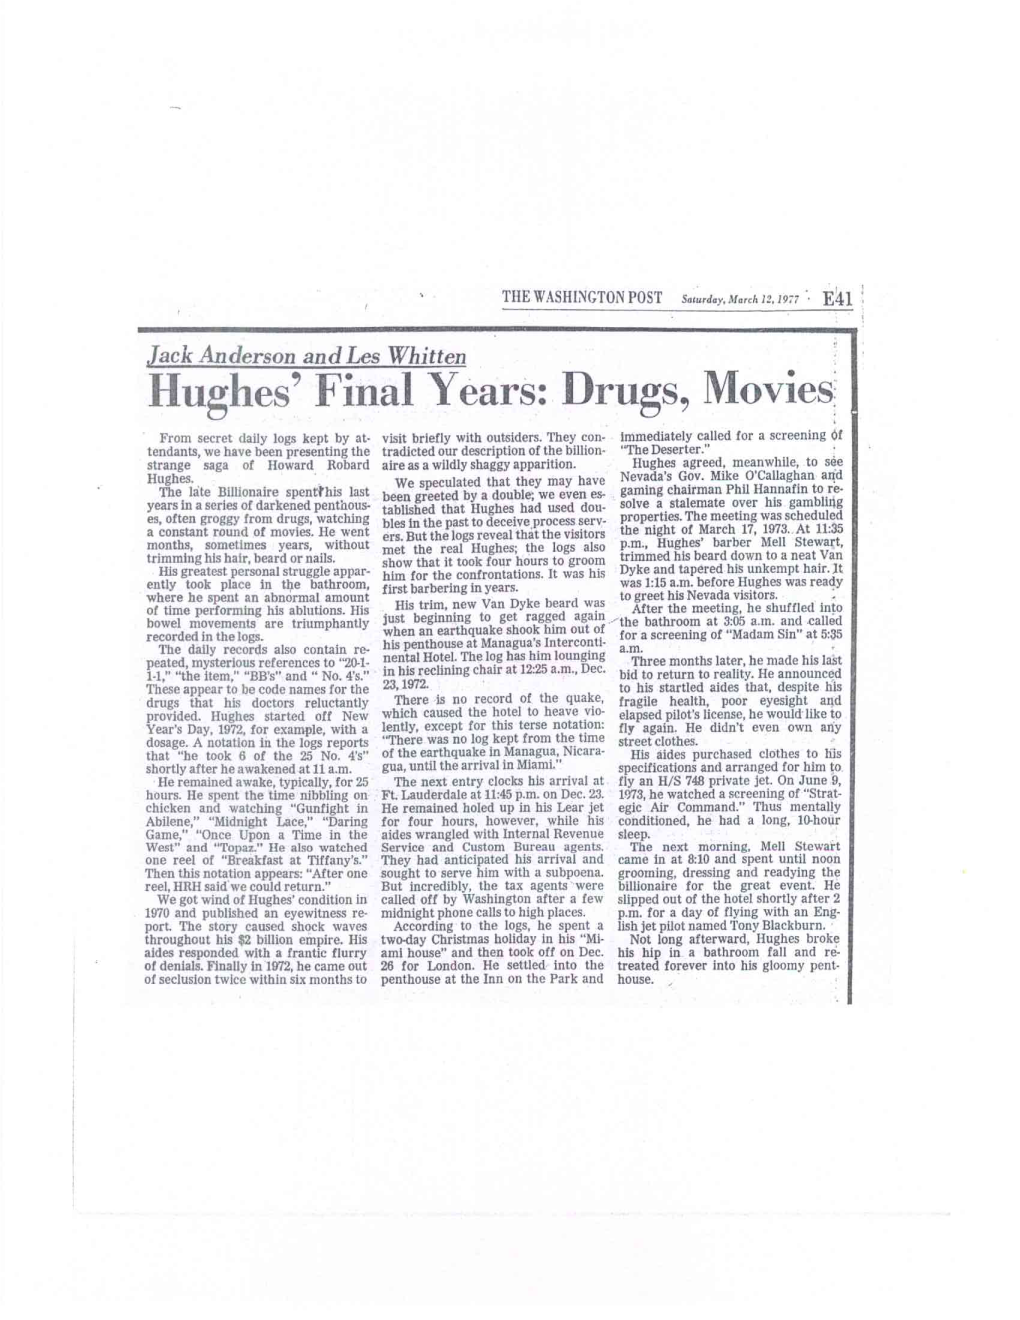 Hughes' Final Years: Drugs, Movies